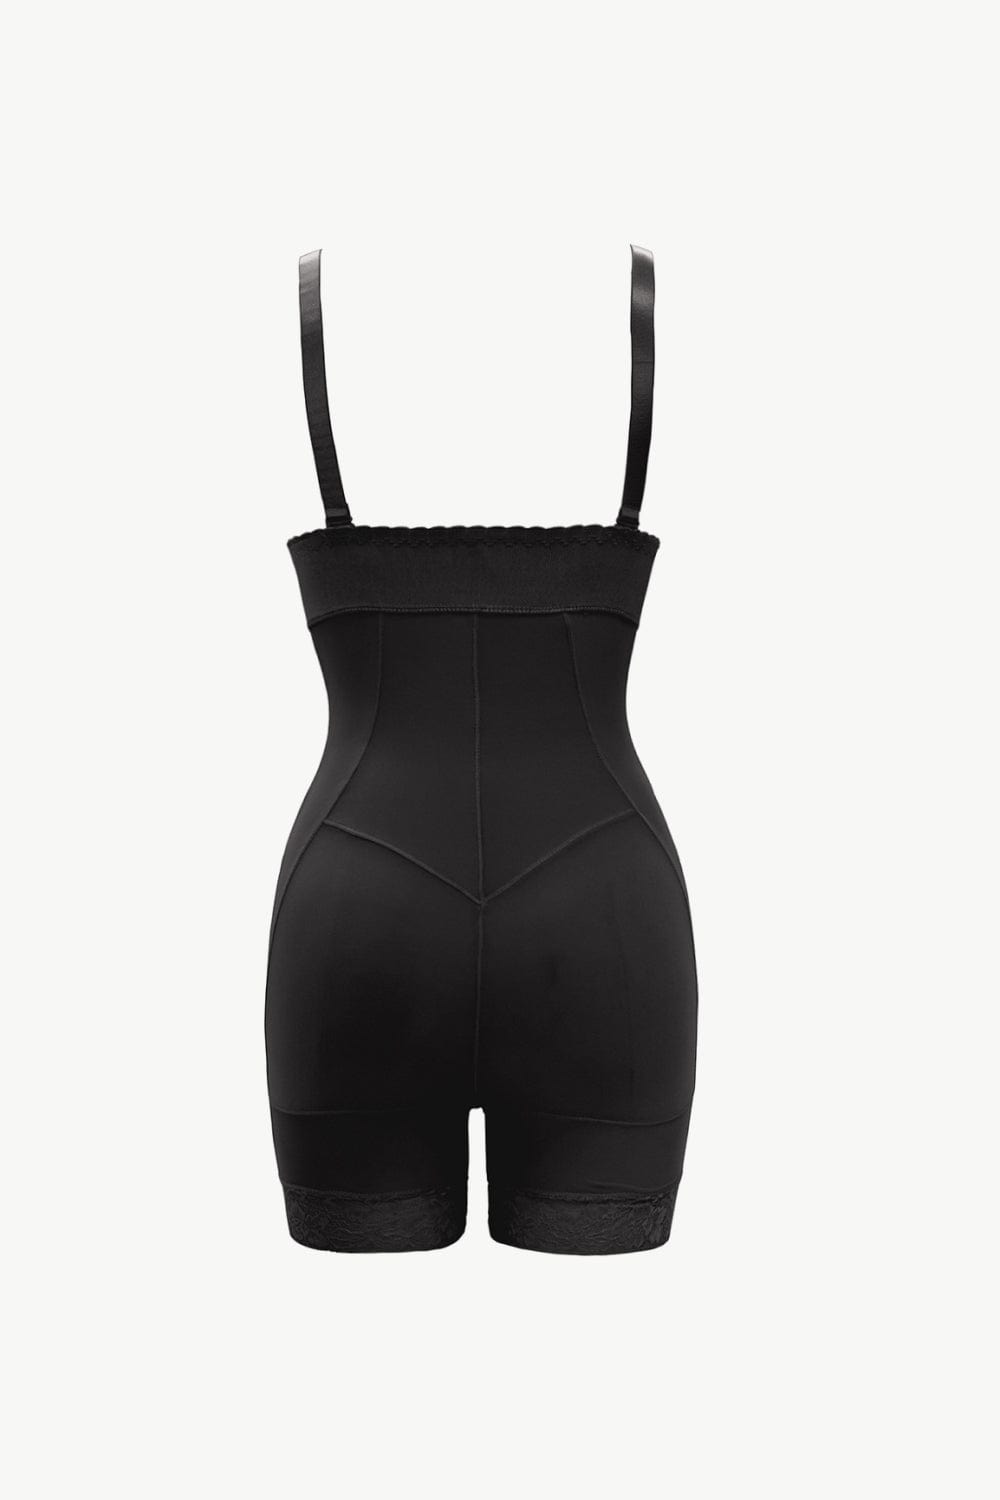 Full Size Zip Up Under-Bust Shaping Bodysuit - Body By J'ne